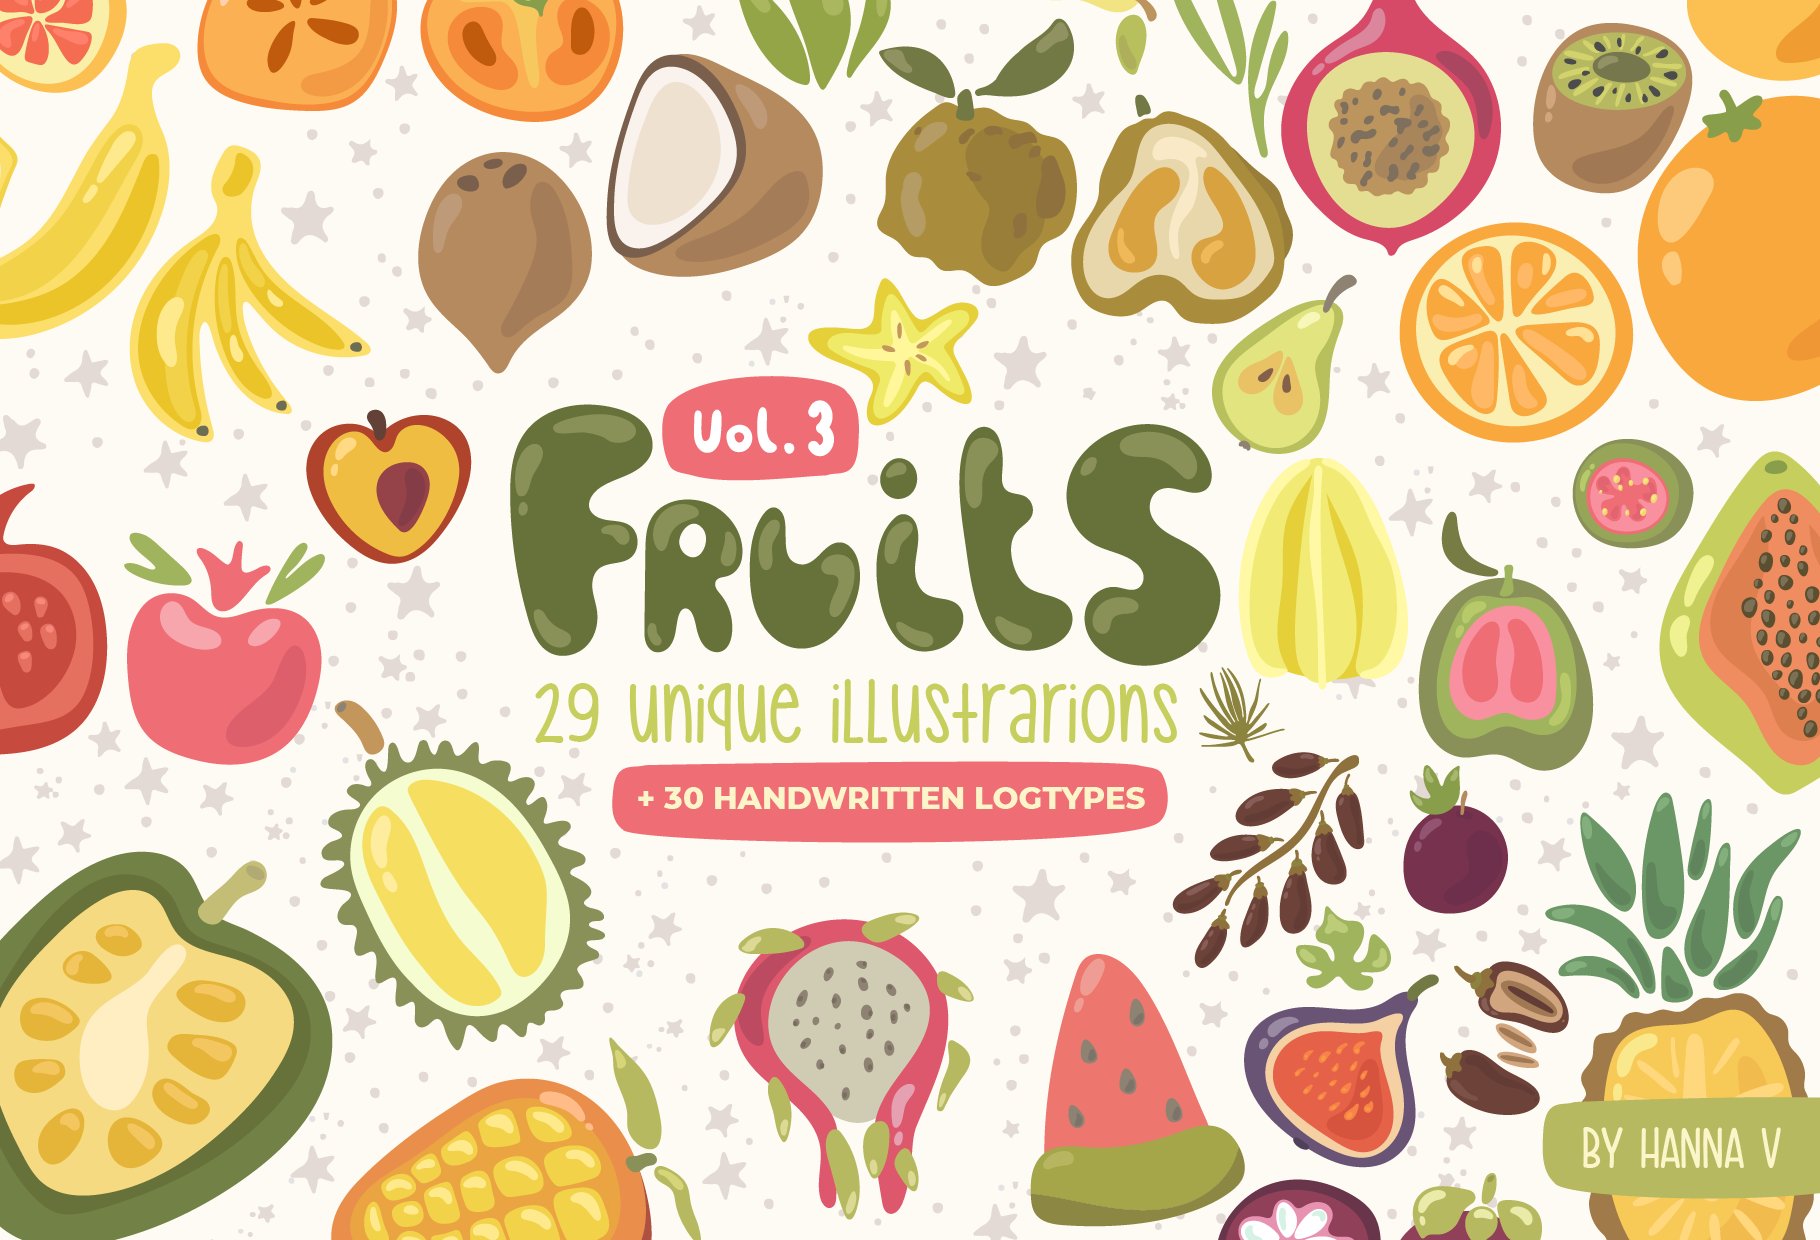 Fruits - Vector Set Vol.3 cover image.